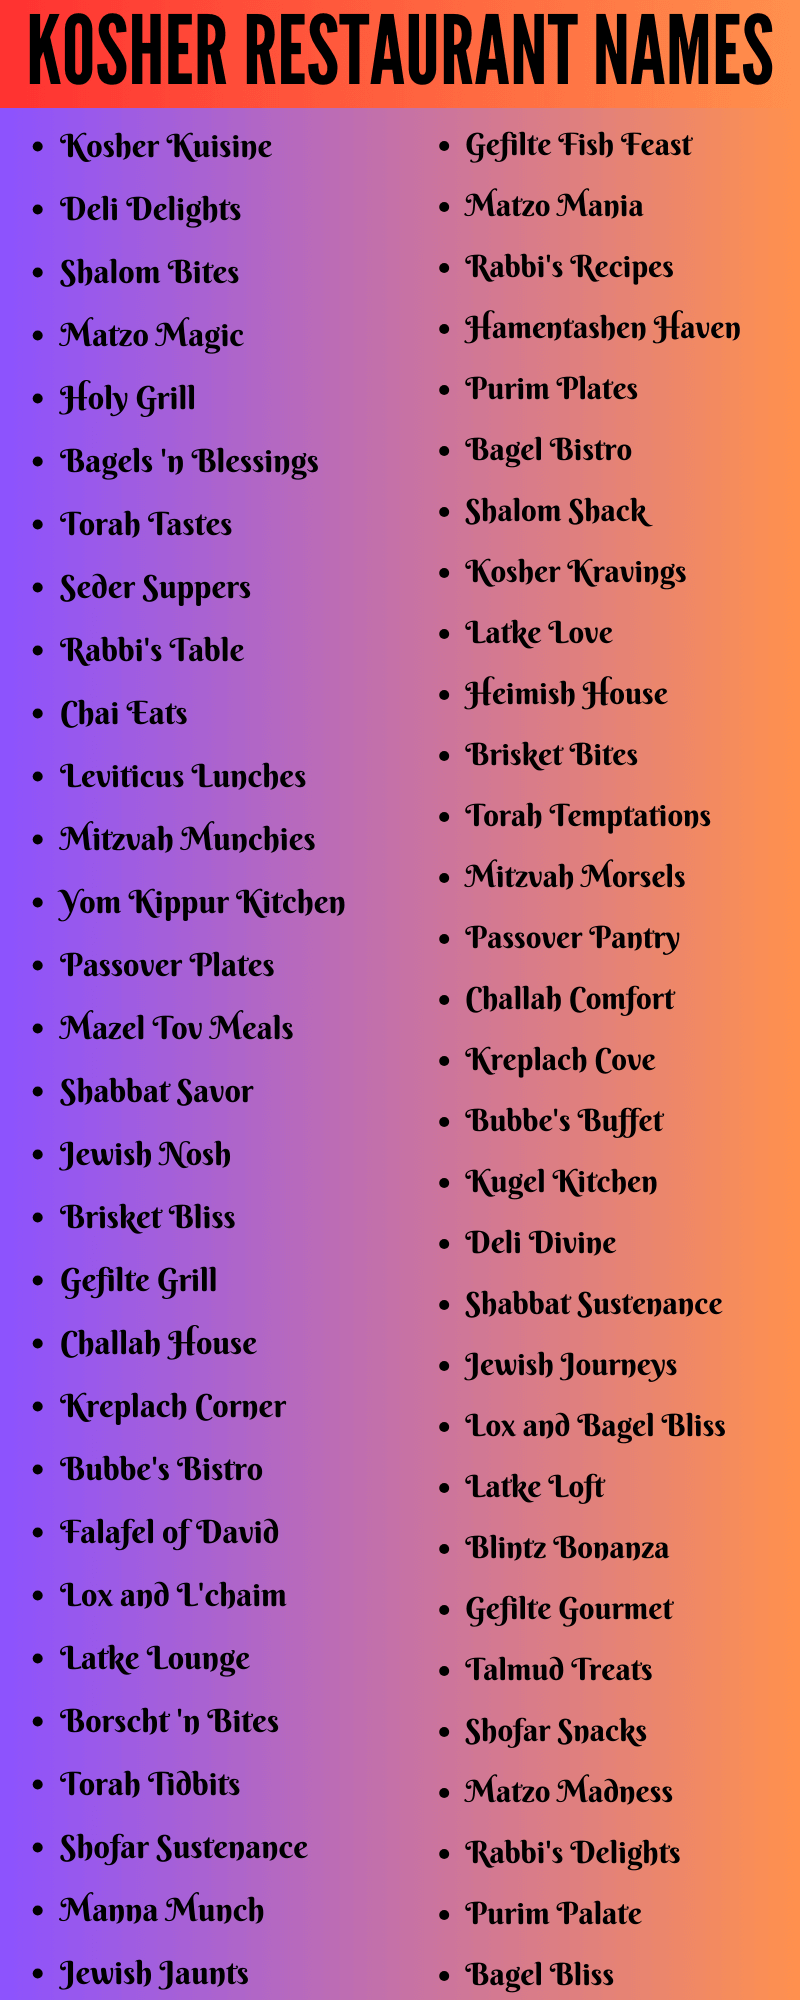 Kosher Restaurant Names